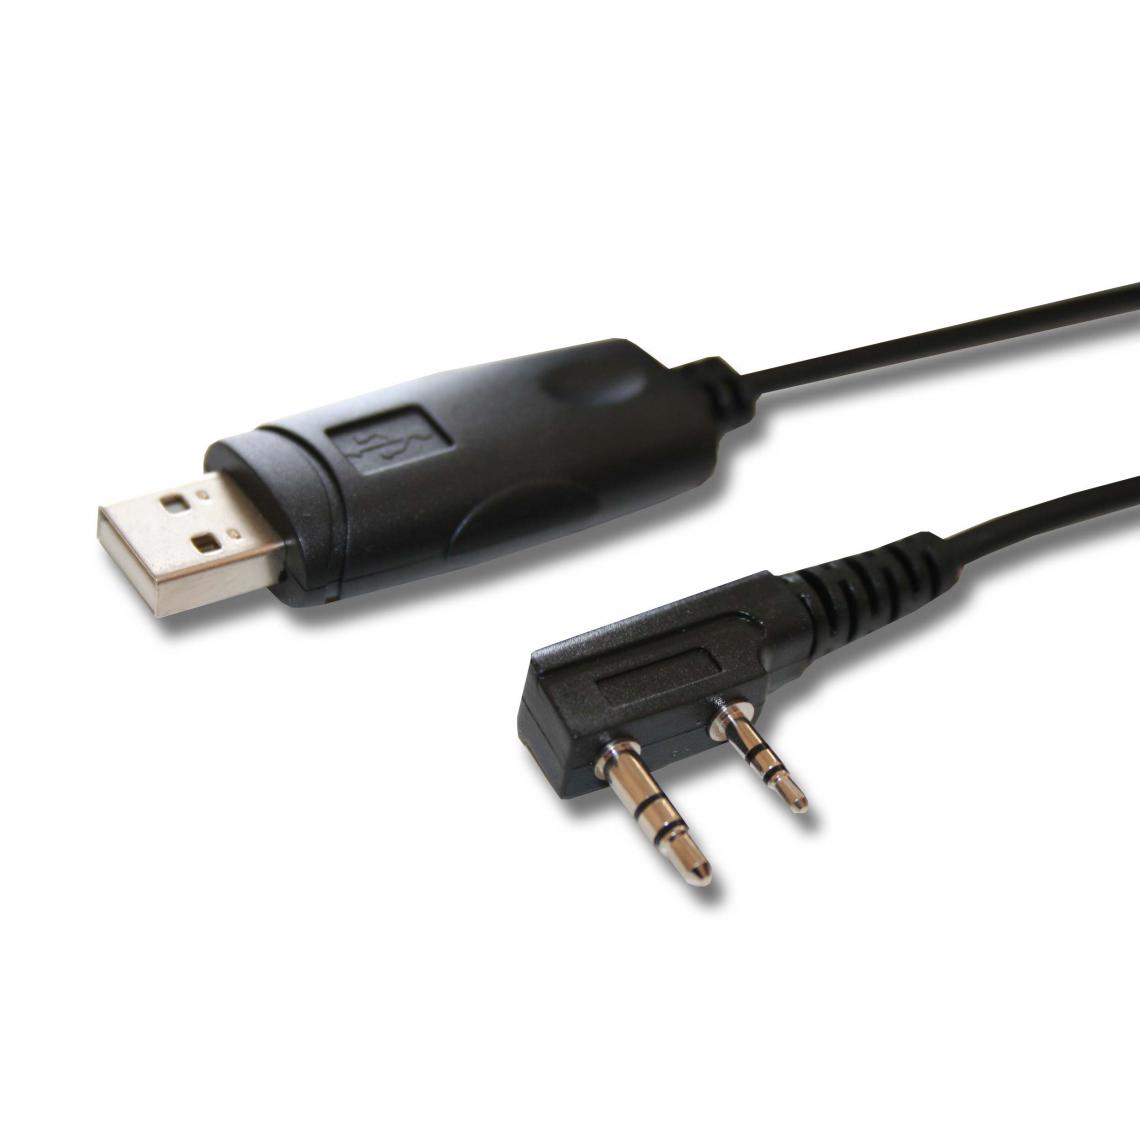 Vhbw - vhbw Câble USB de programmation compatible avec Kenwood TK-220, TK-2200, TK-2200L, TK-2200LP, TK-2202, TK-2202K, TK-2212, TK-2212K appareils radio - Accessoires alimentation